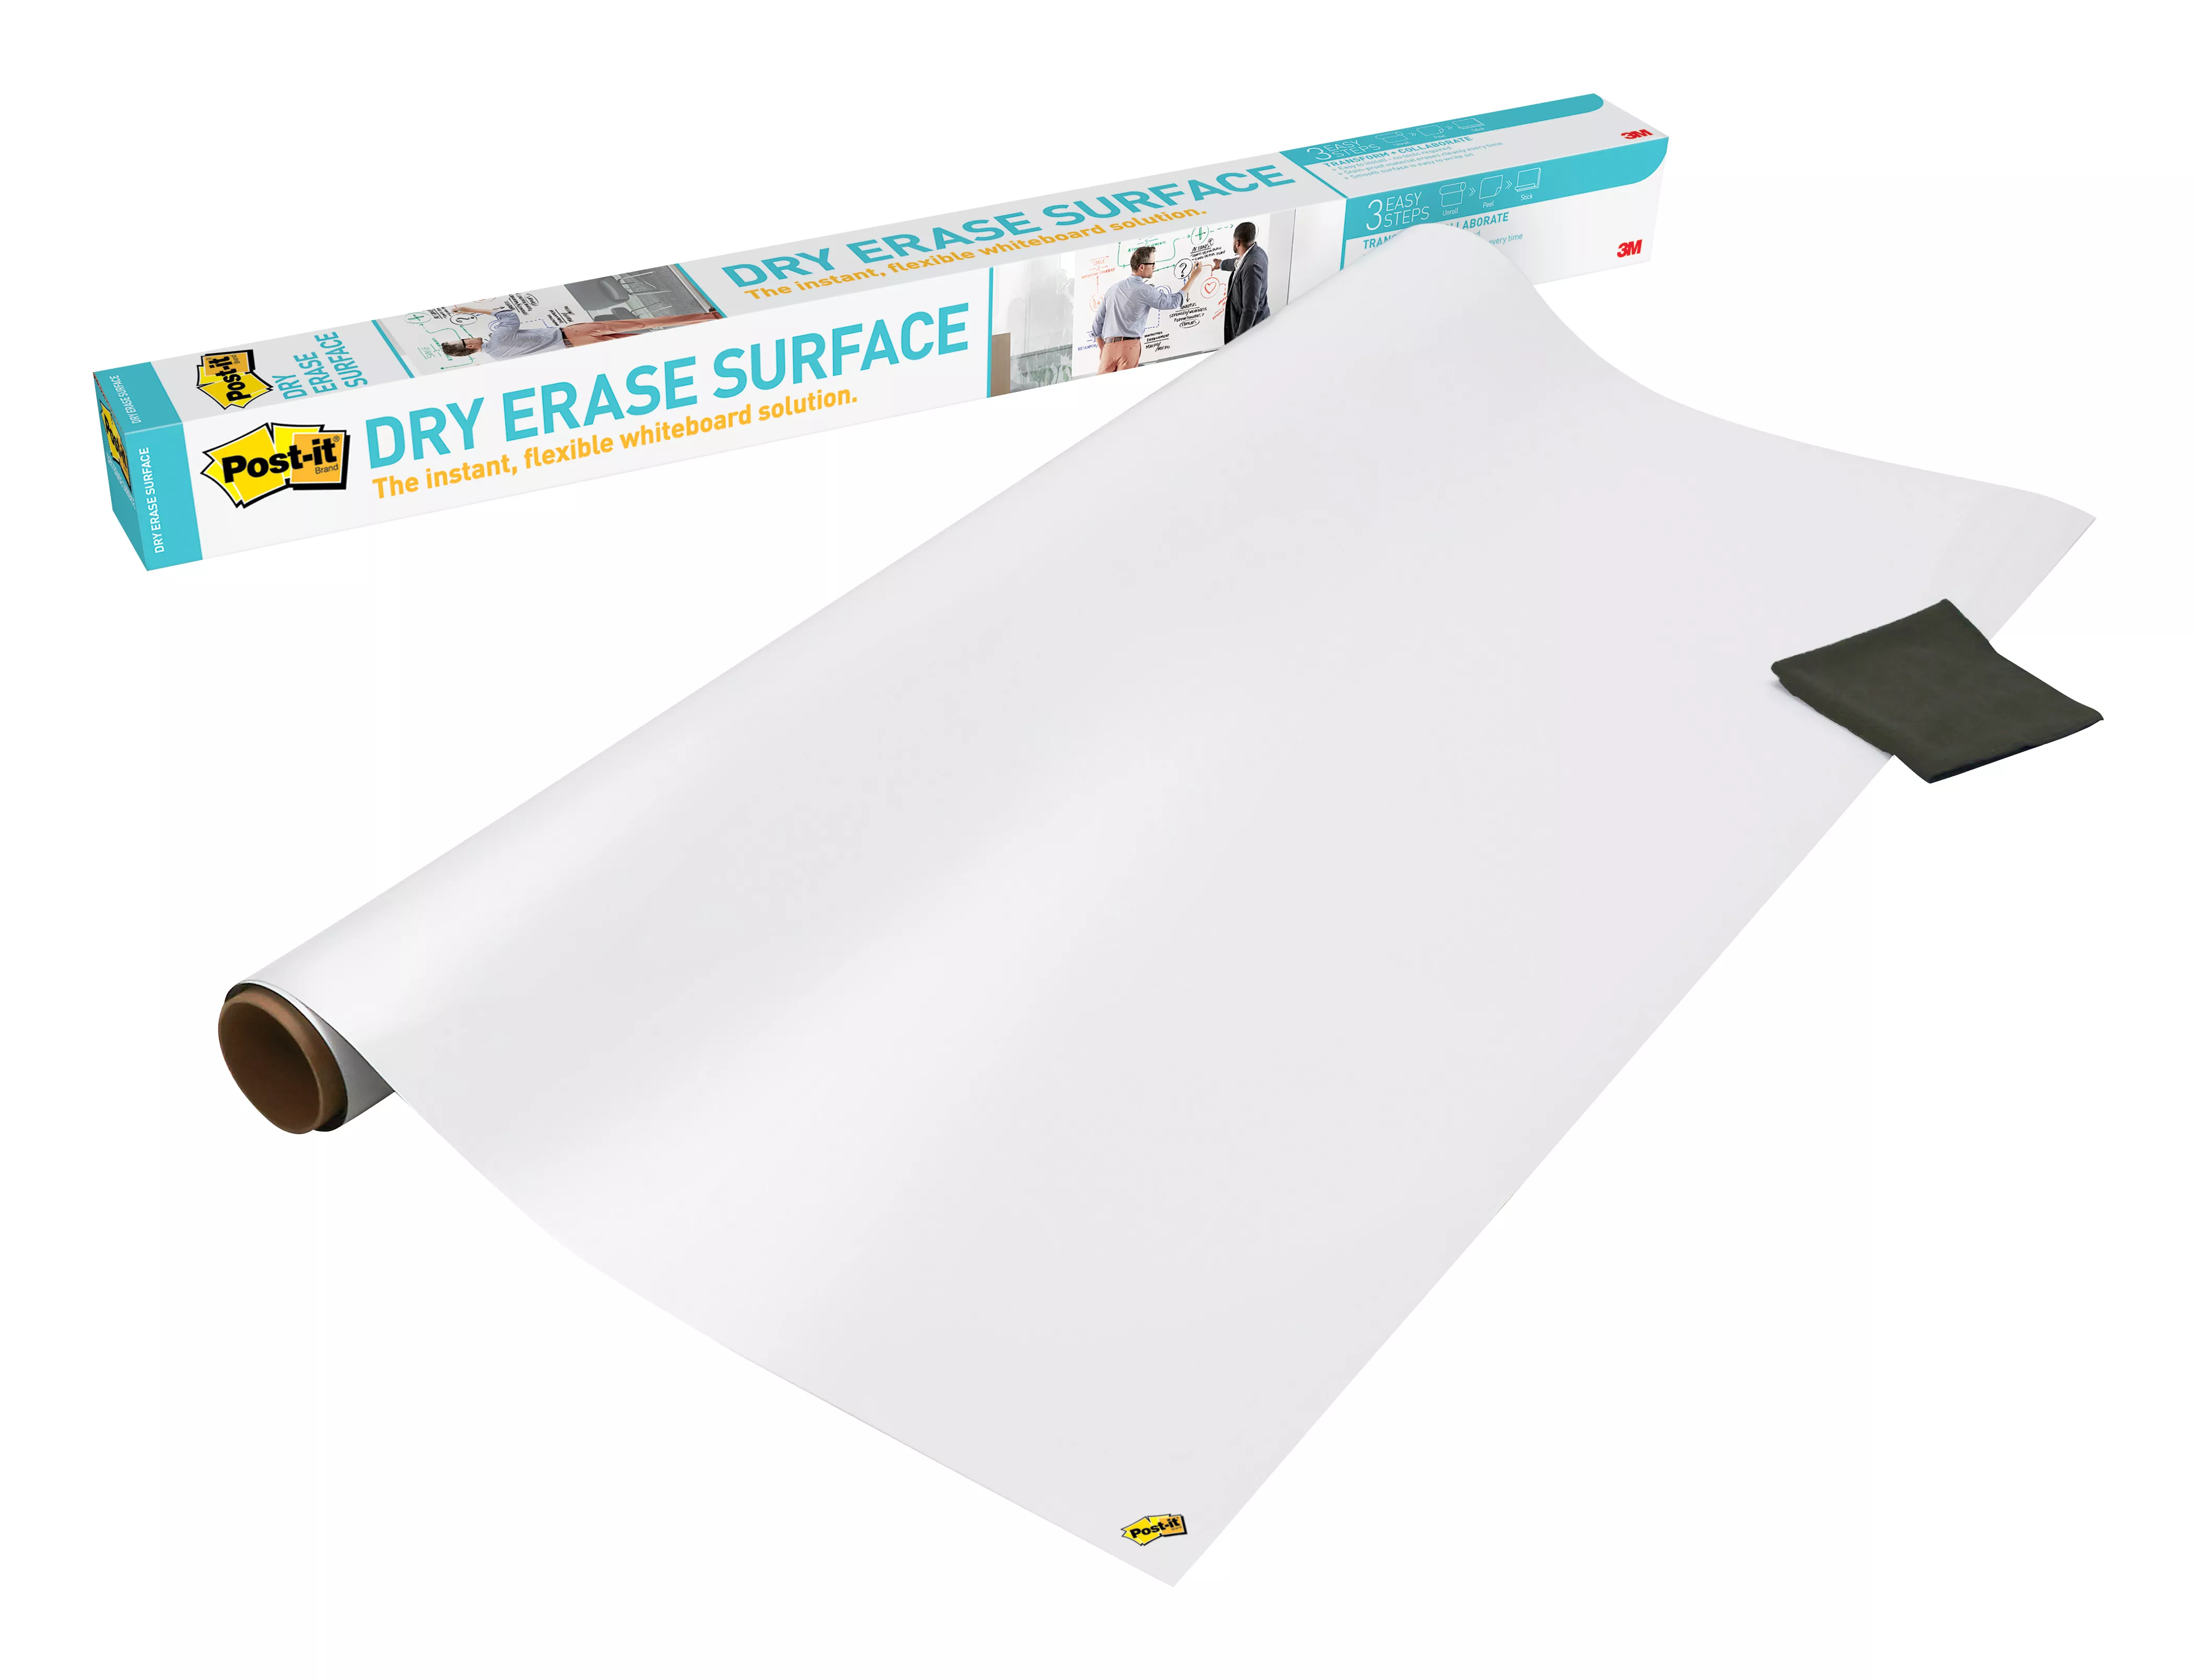 SKU 7100217828 | Post-it® Super Sticky Dry Erase Surface DEF4x3